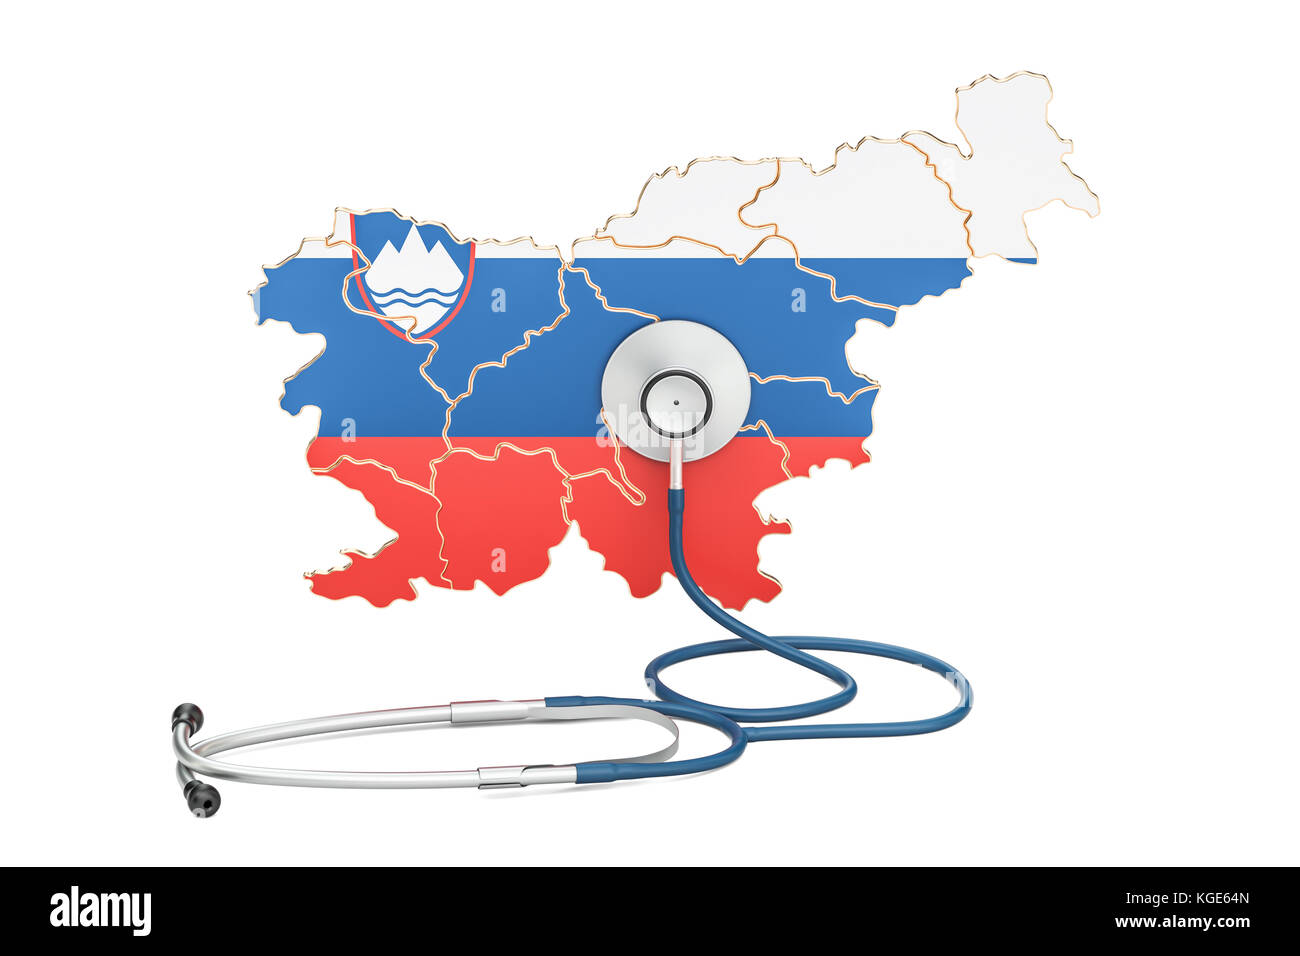 Slowenische Karte mit Stethoskop, national Health Care Concept, 3D-Rendering Stockfoto